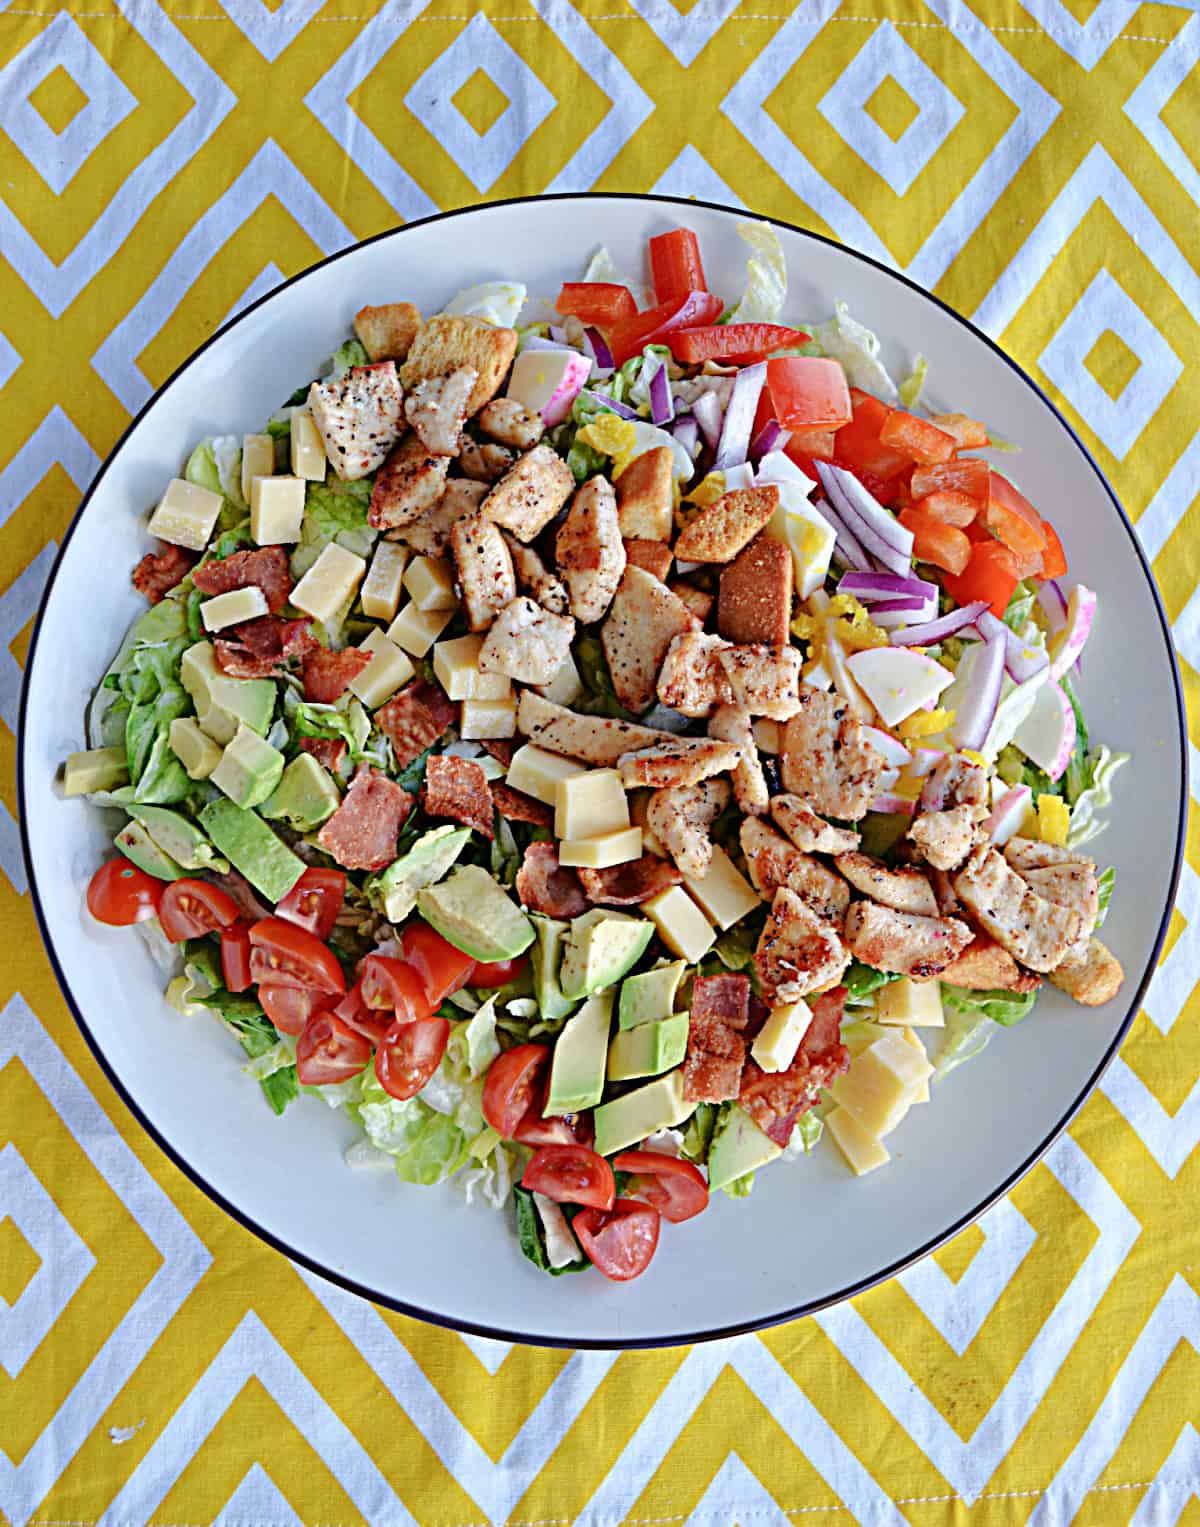 A plate of Cobb Salad.